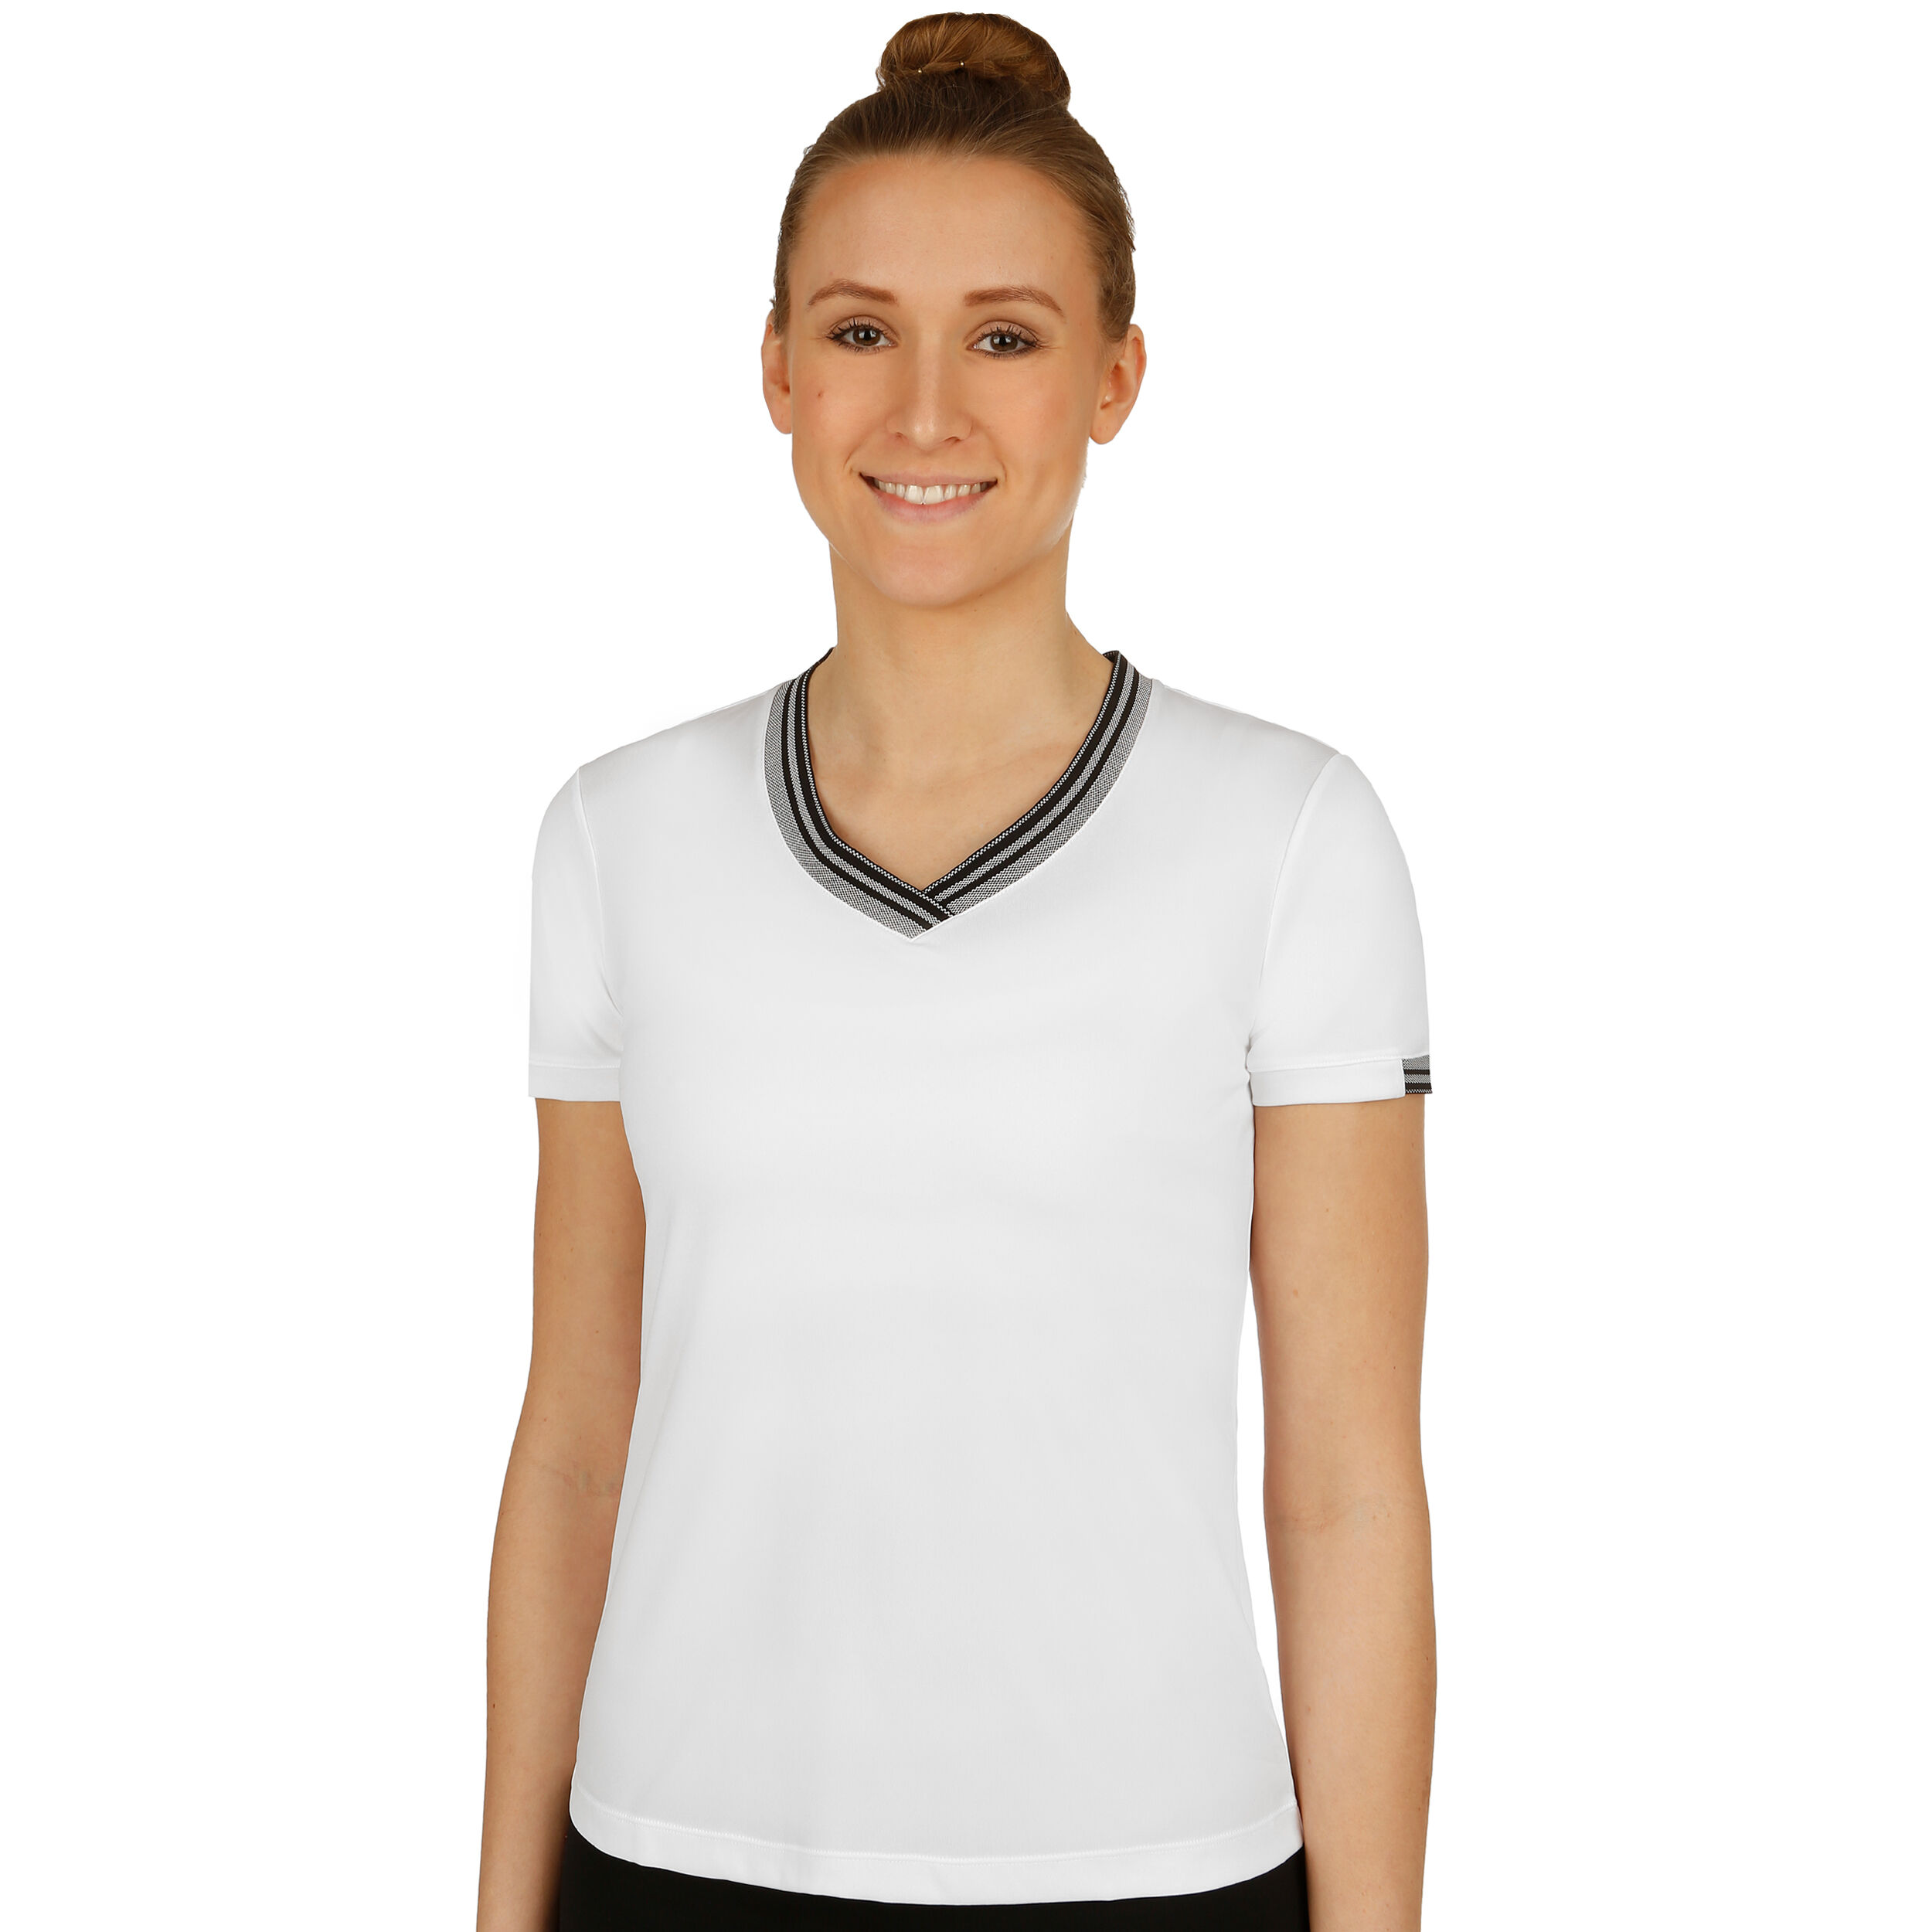 Wilson Short Sleeve V-Neck Damen Funktions-Shirt hellblau SALE statt 39,95€* 